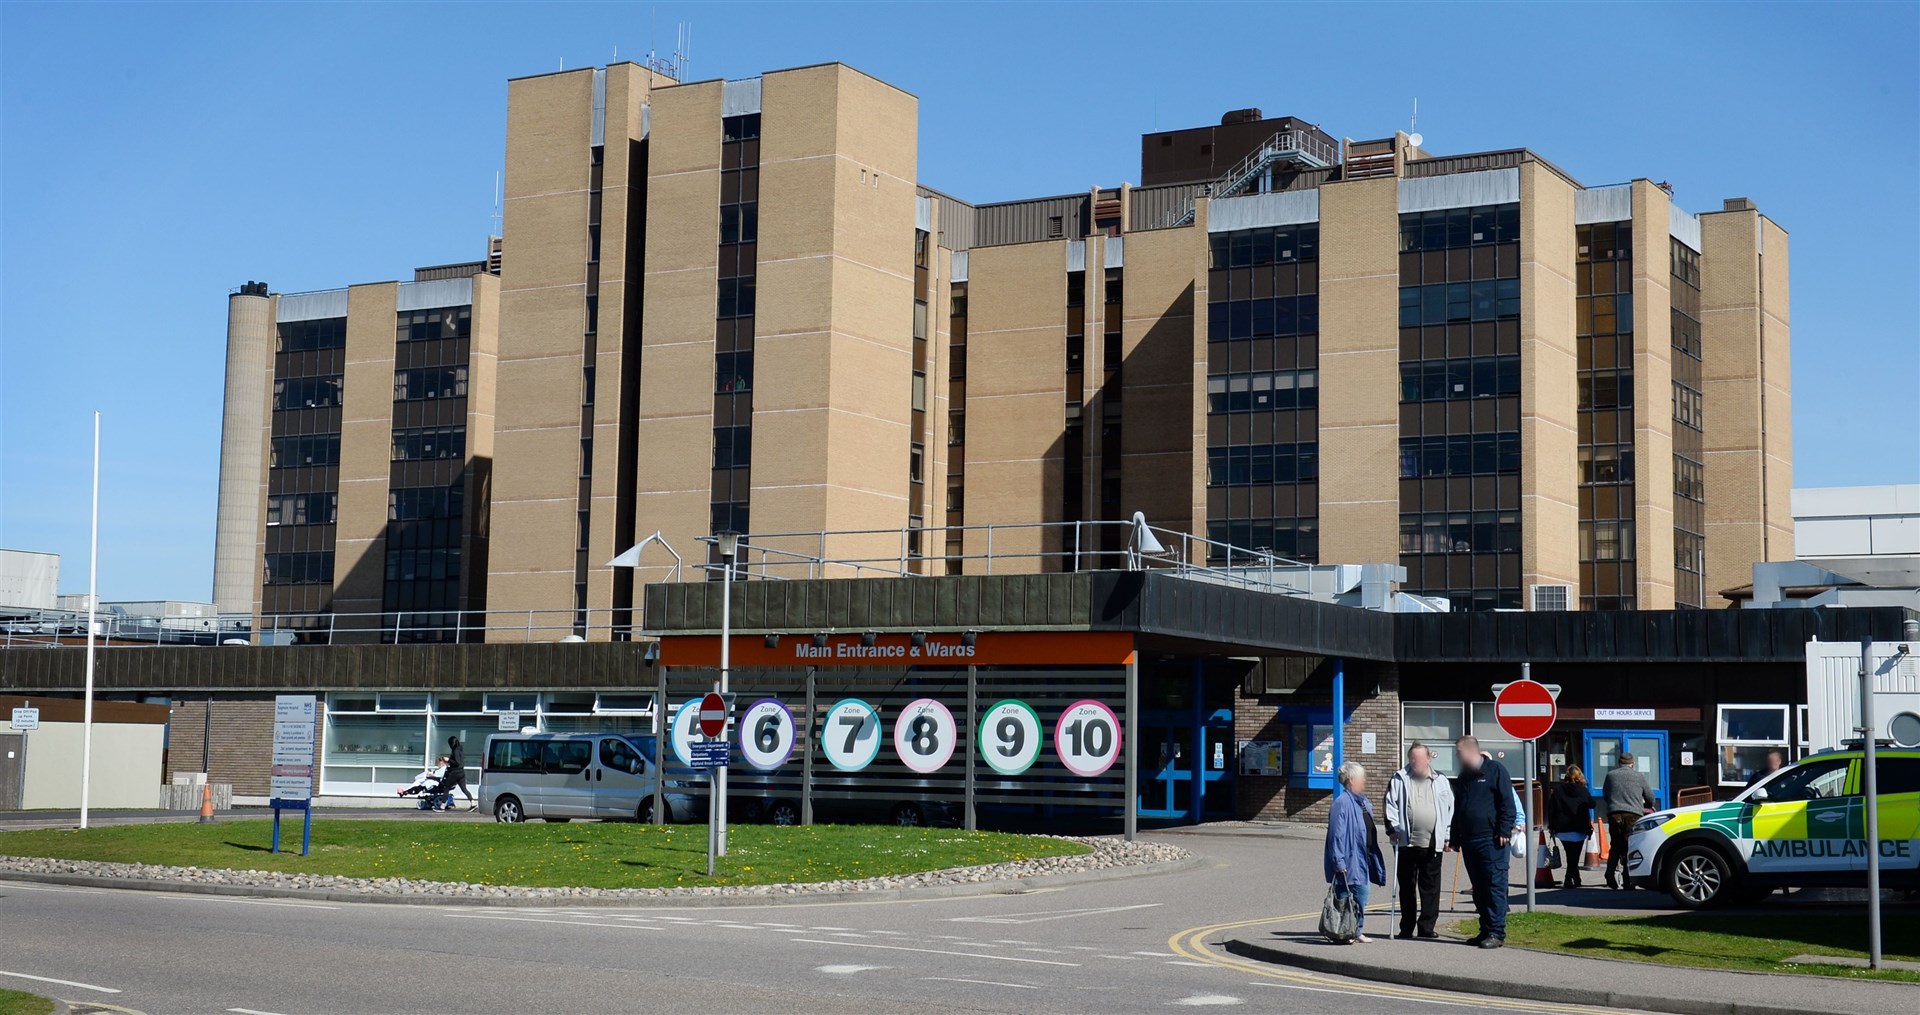 Raigmore Hospital is the region’s biggest medical facility.